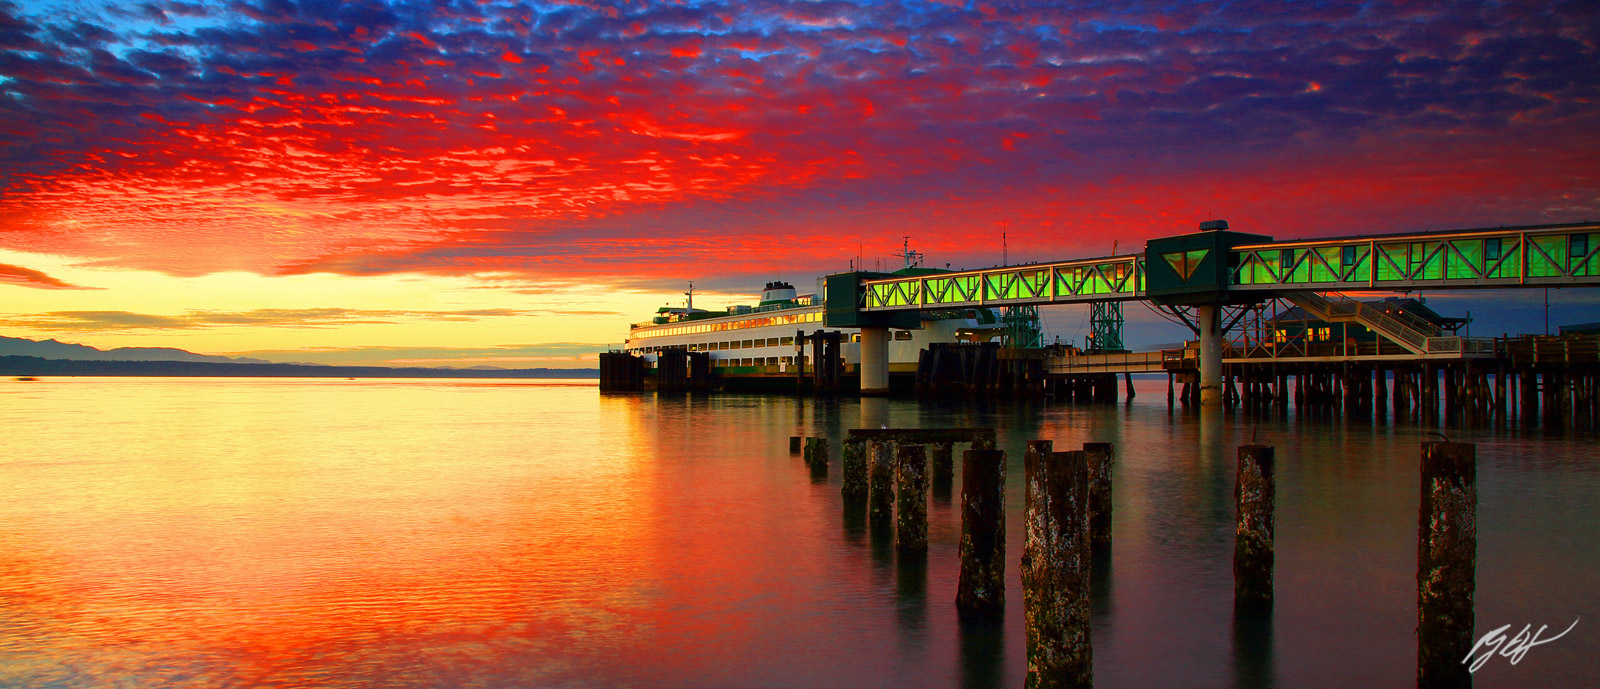 Sunset with the Edmonds Ferry at Dock from Brackett's Landing on Edmonds Beach, Washington